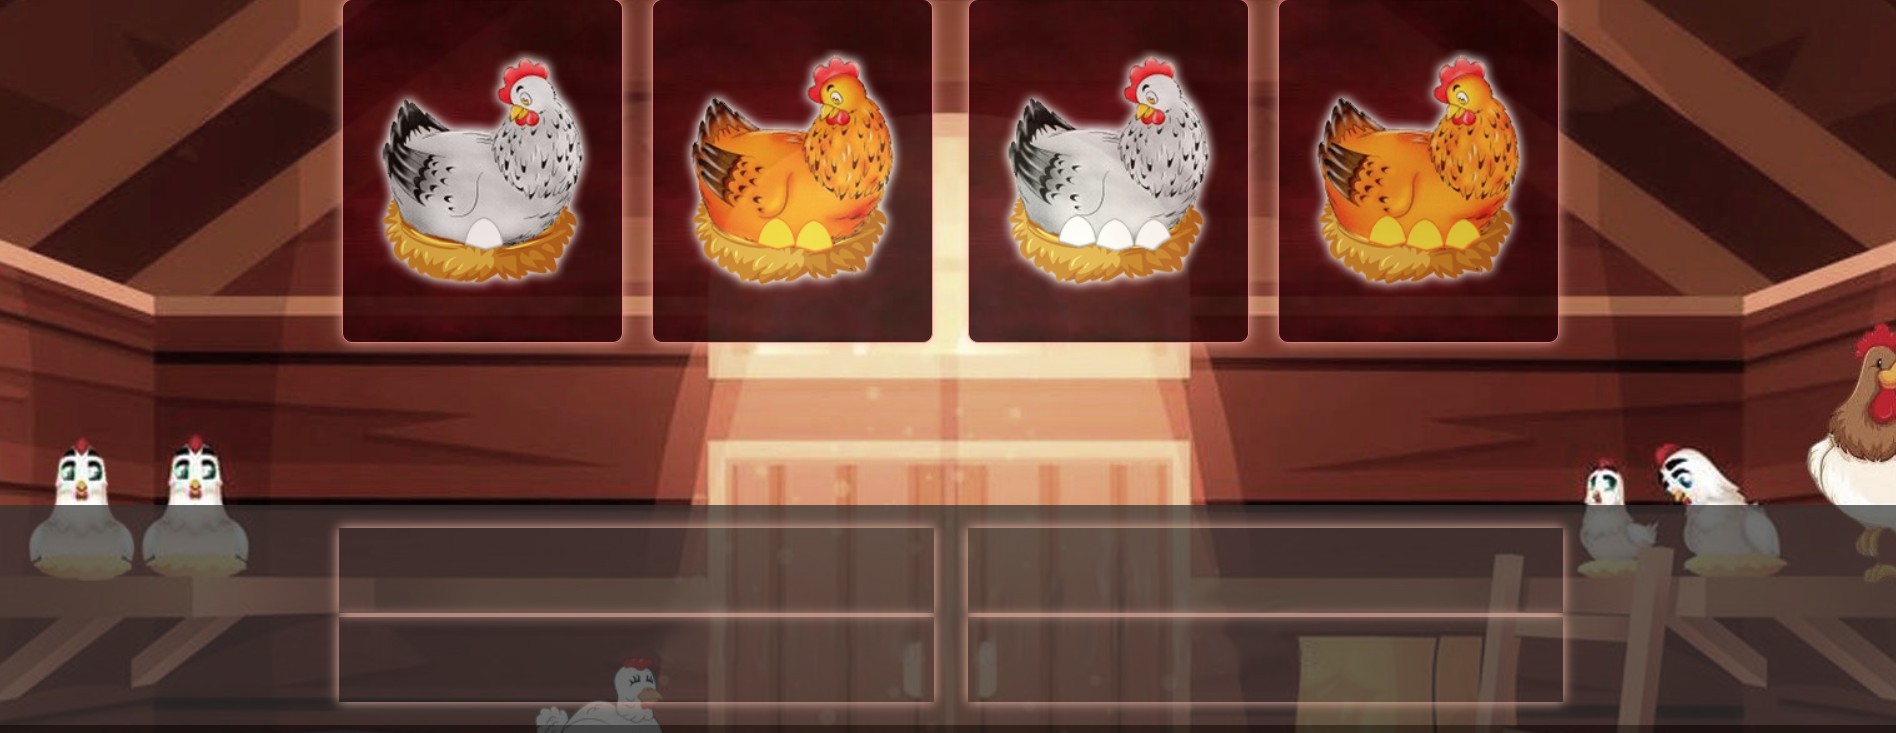 Chicken House игра обзор